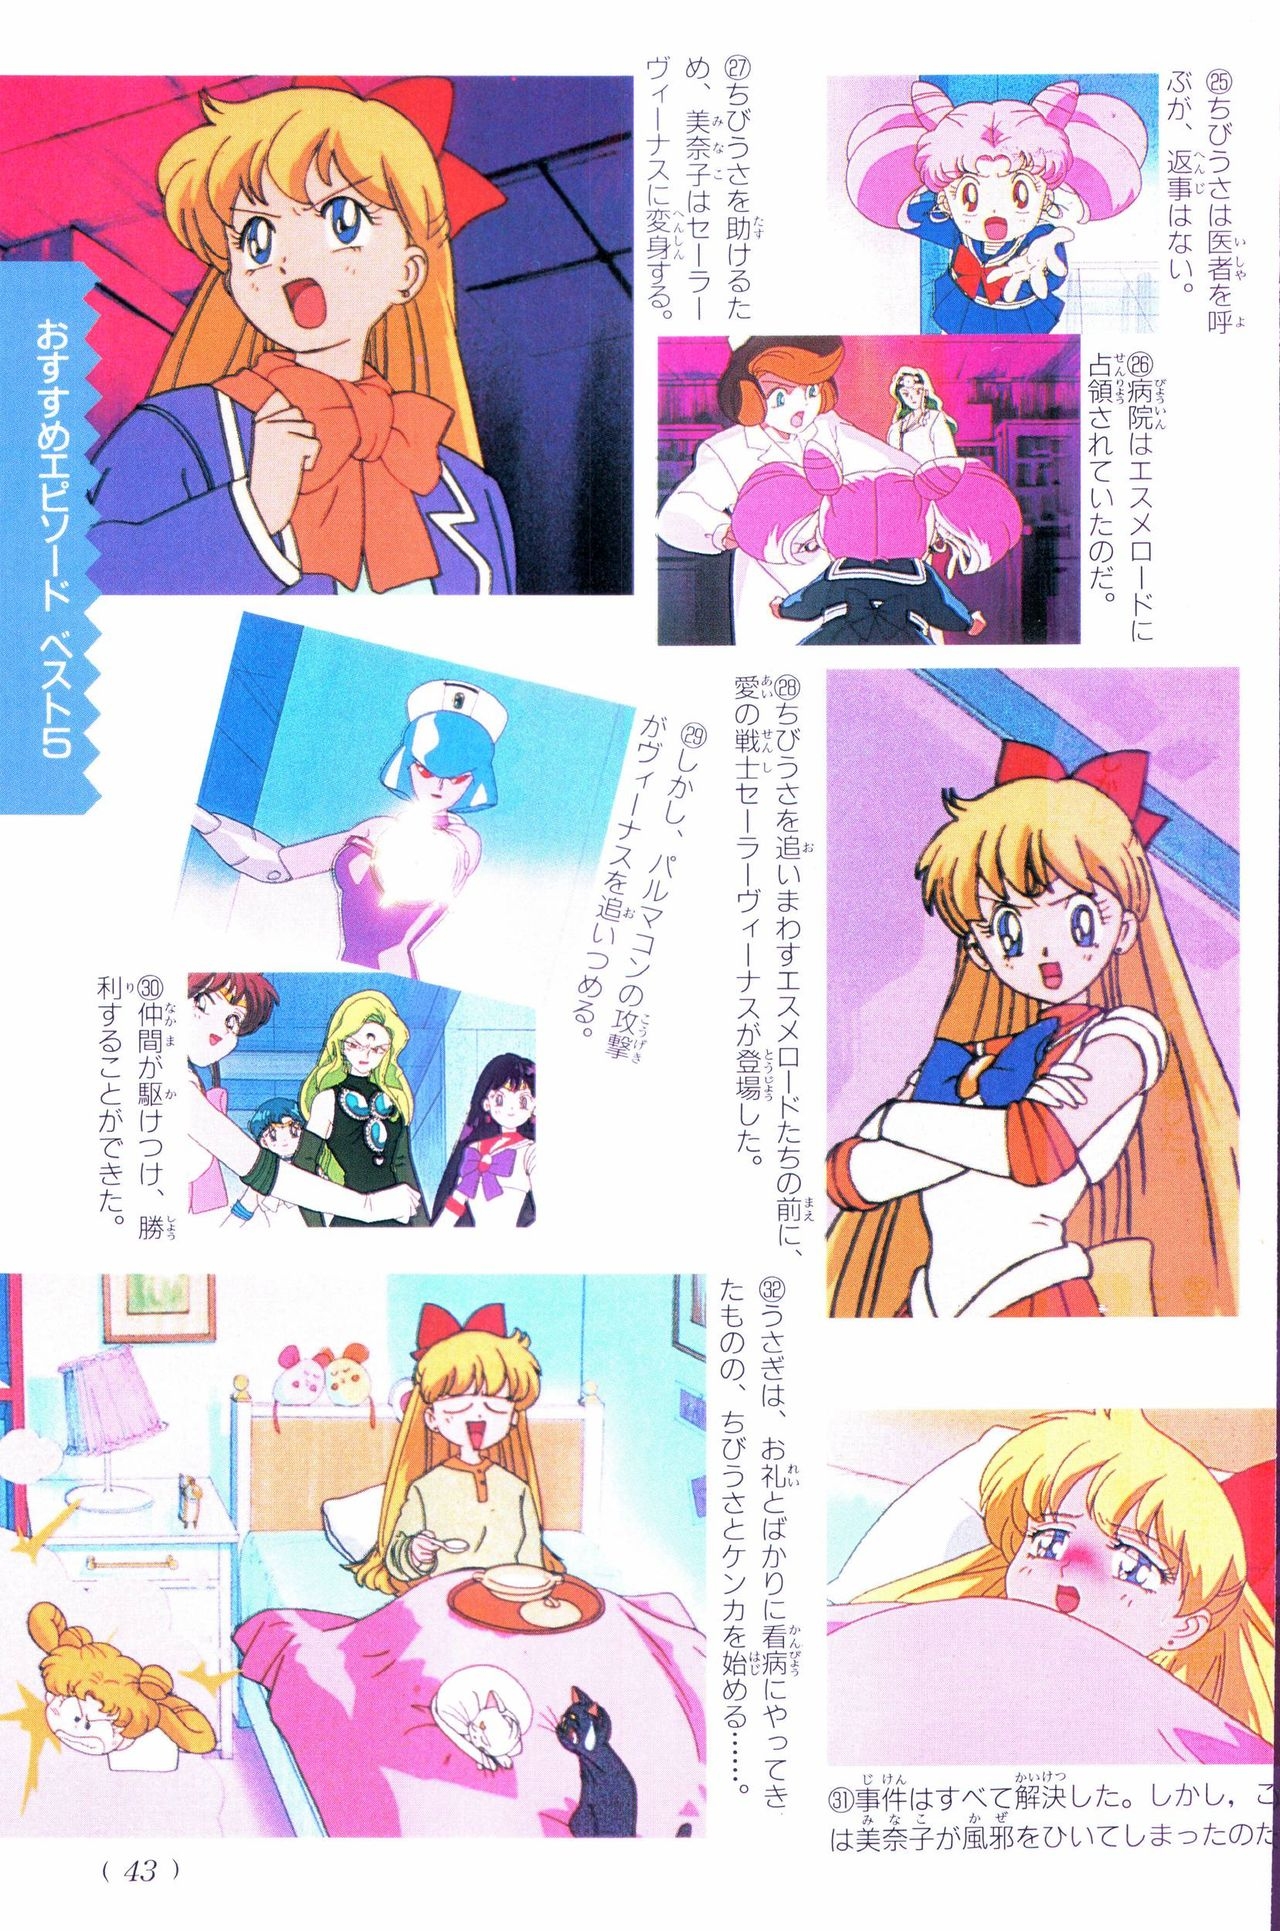 Sailor Moon Official Fan Book - Sailor Venus 51